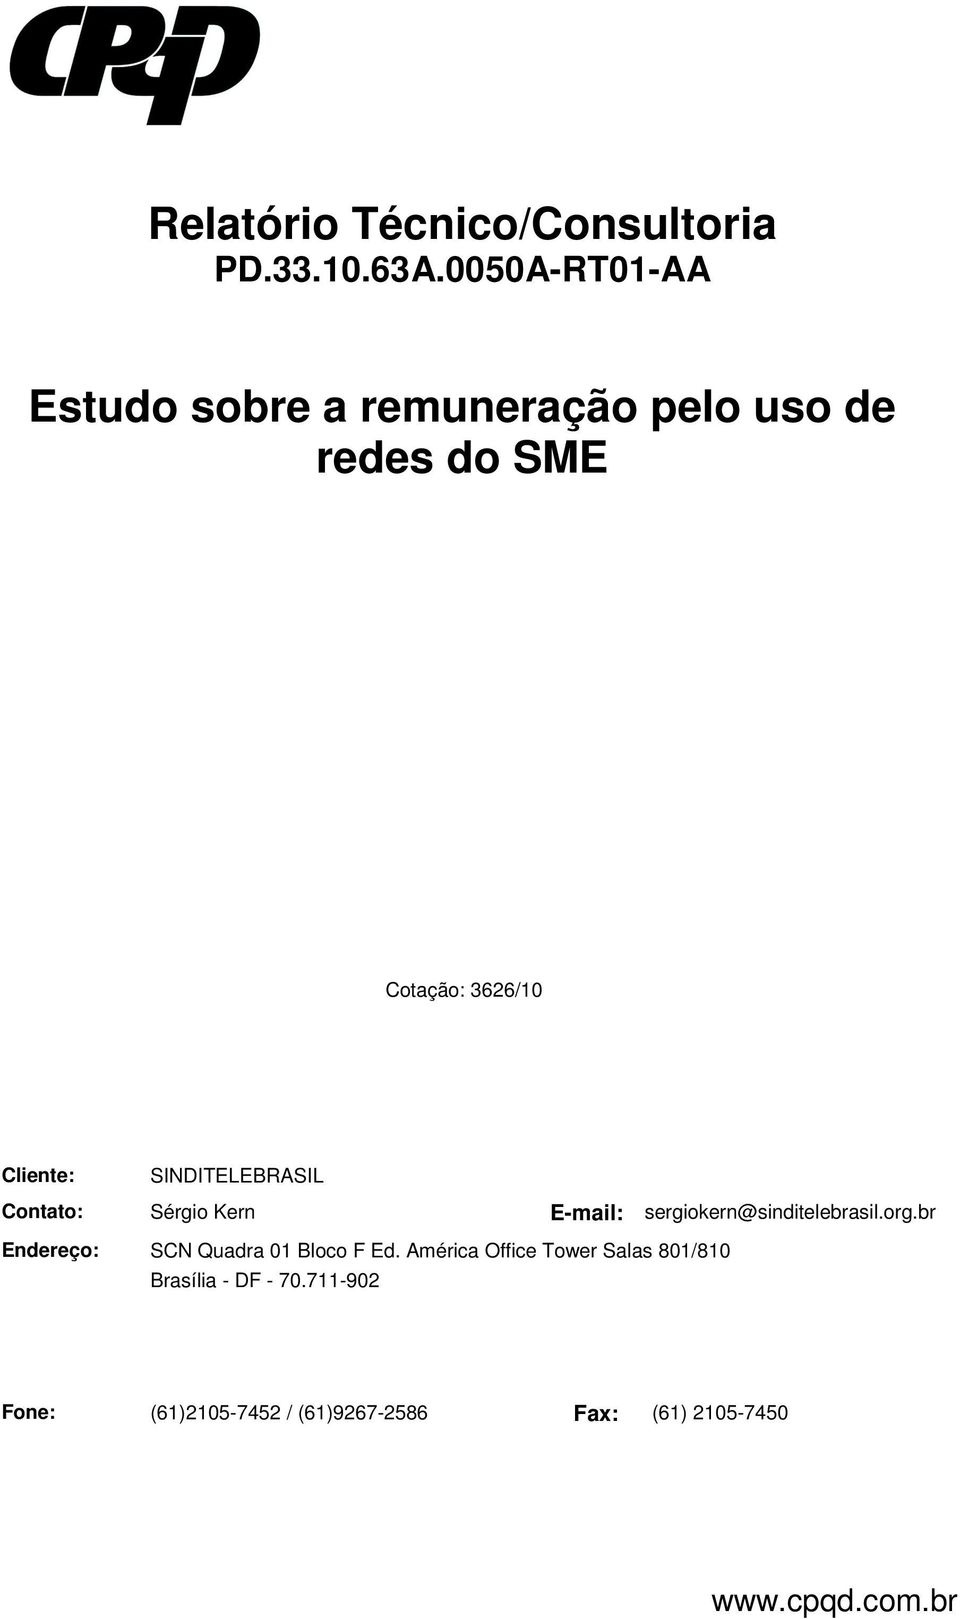 SINDITELEBRASIL Contato: Sérgio Kern E-mail: sergiokern@sinditelebrasil.org.